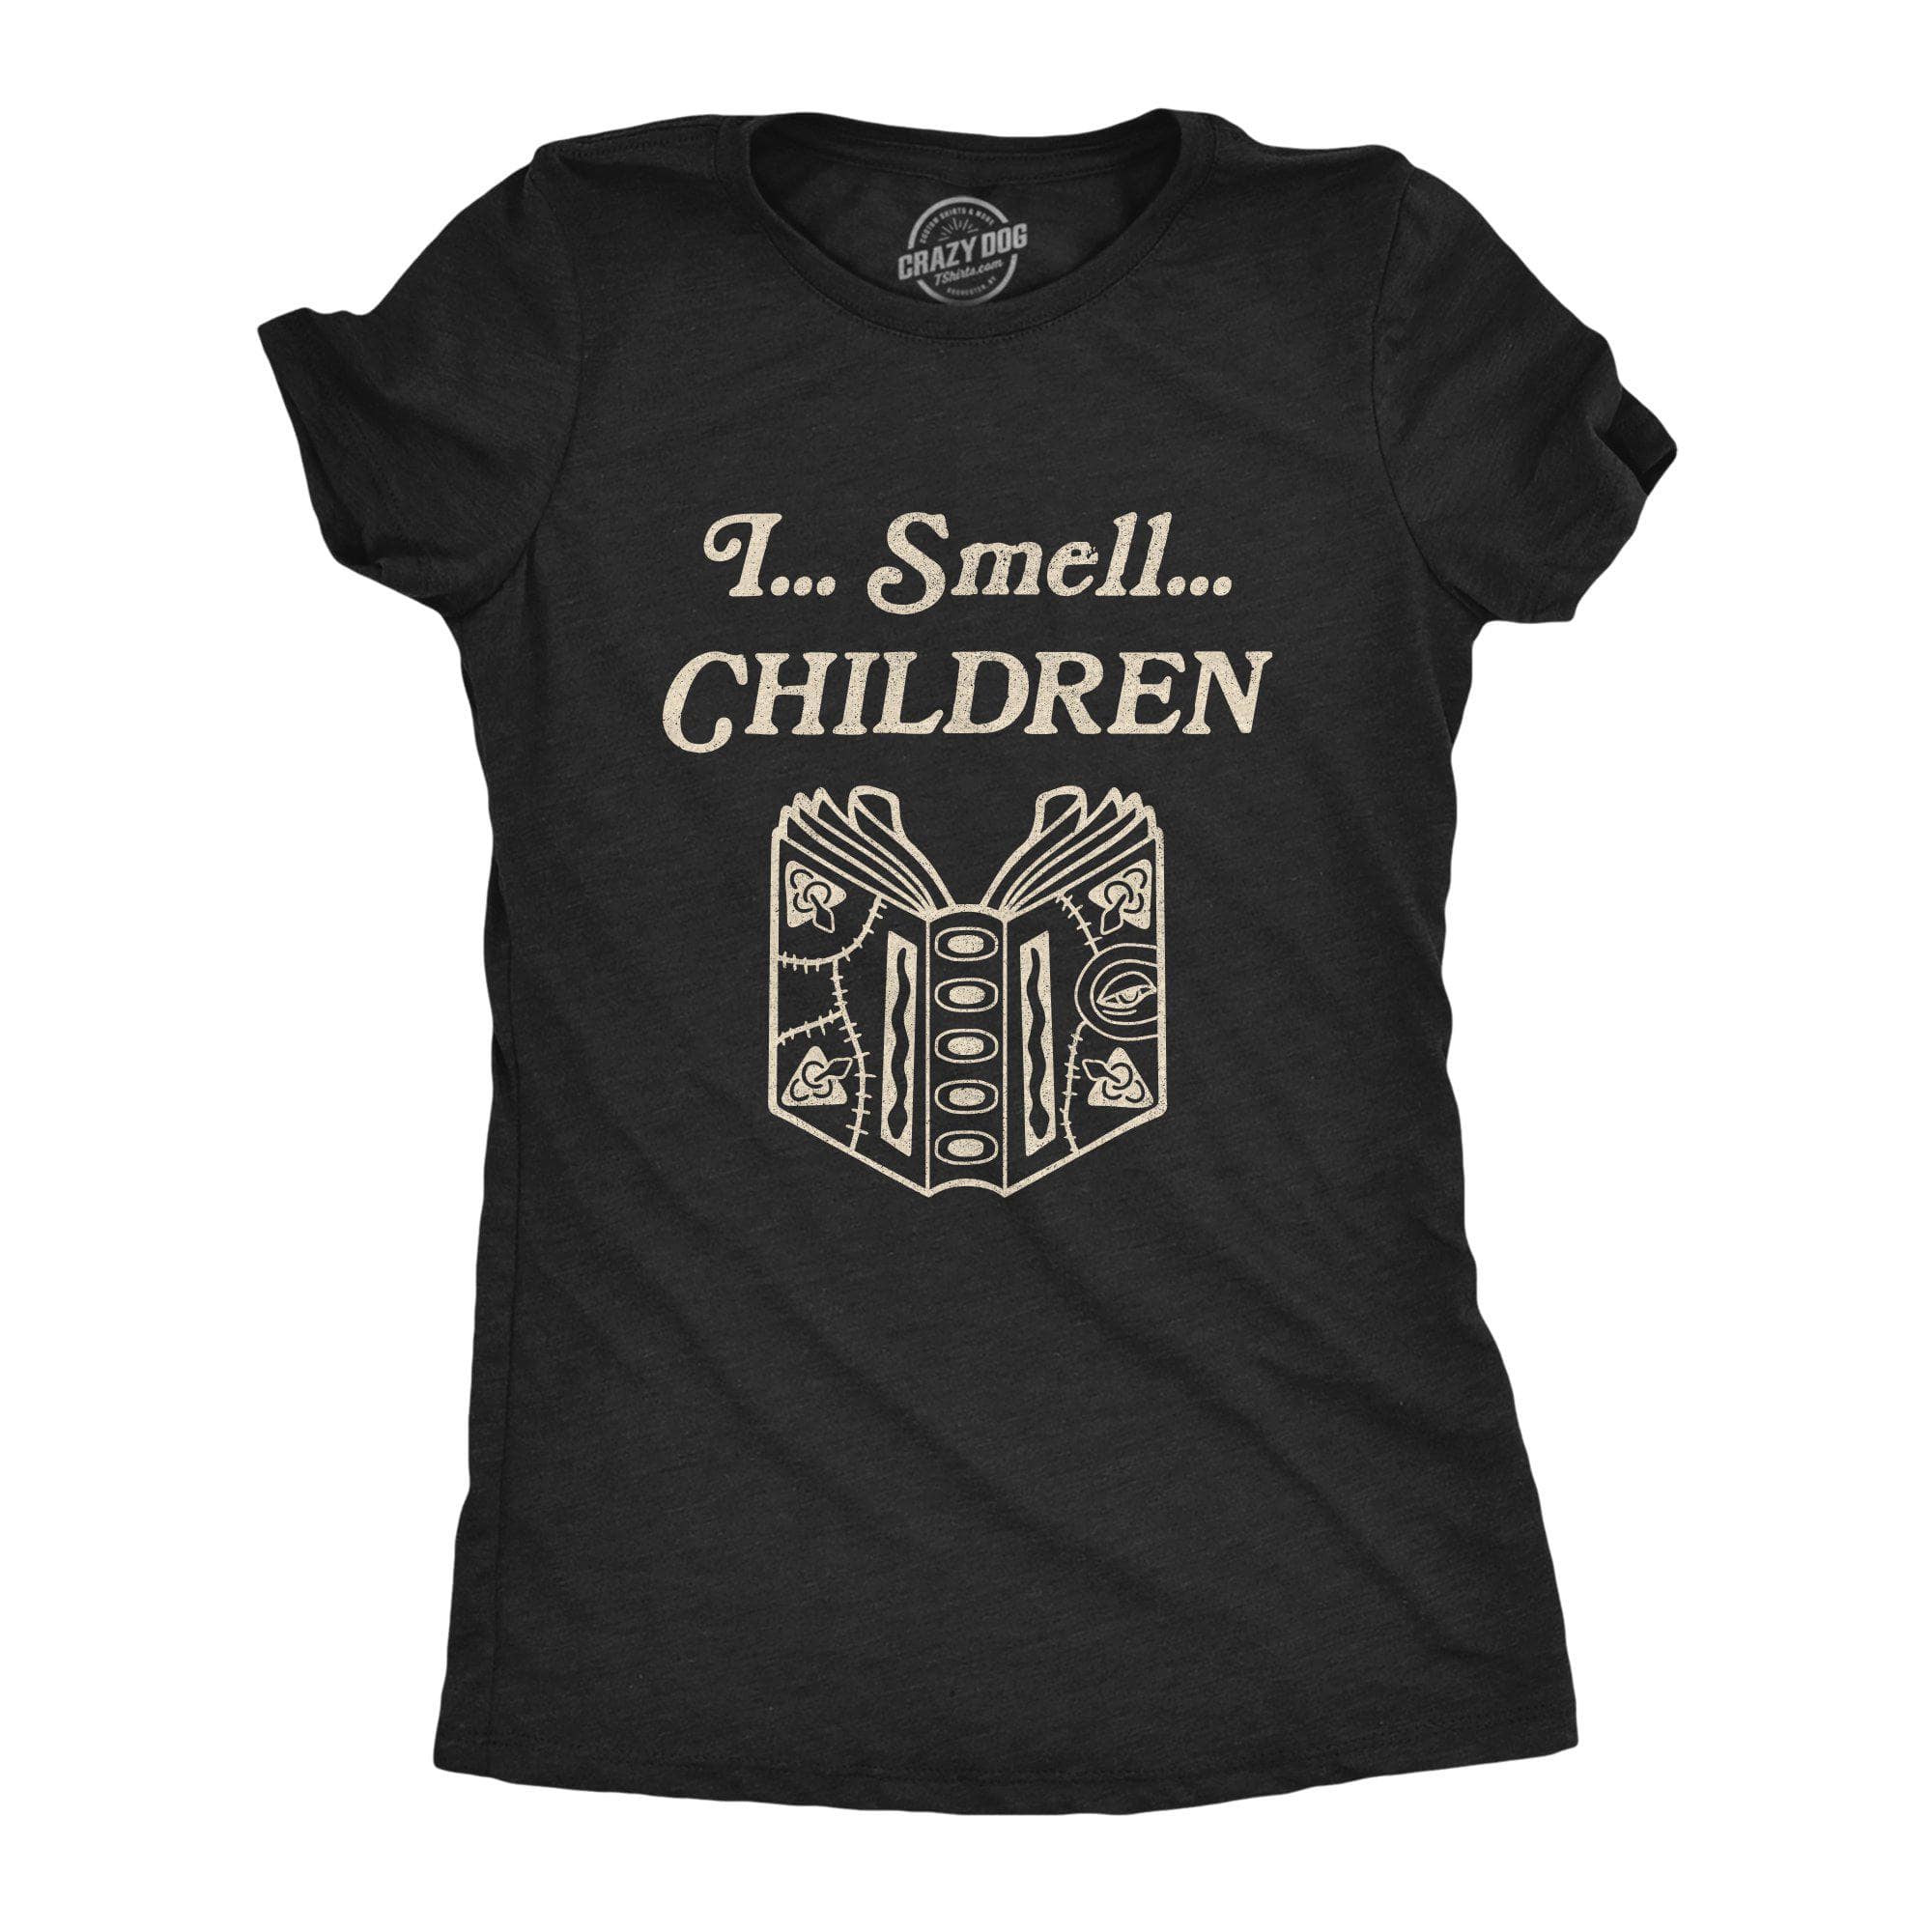 I Smell Children Women's Tshirt - Crazy Dog T-Shirts